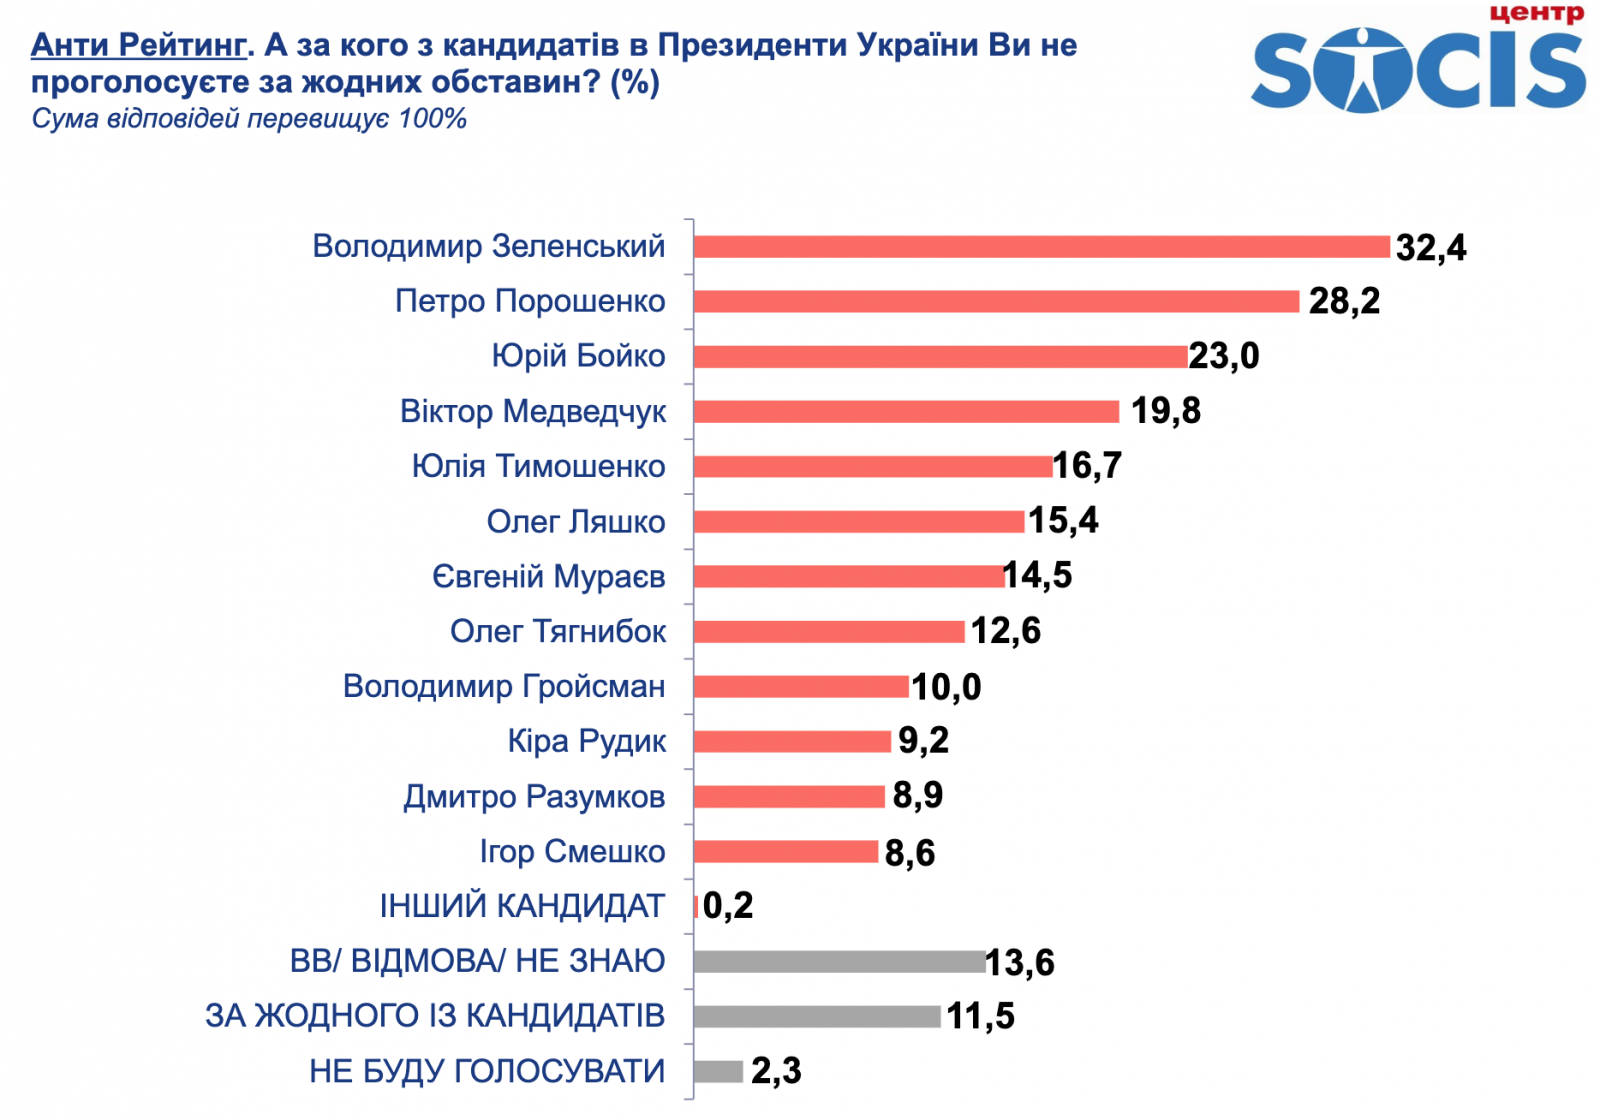 Рейтинг антипатий. Инфографика: SOCIS